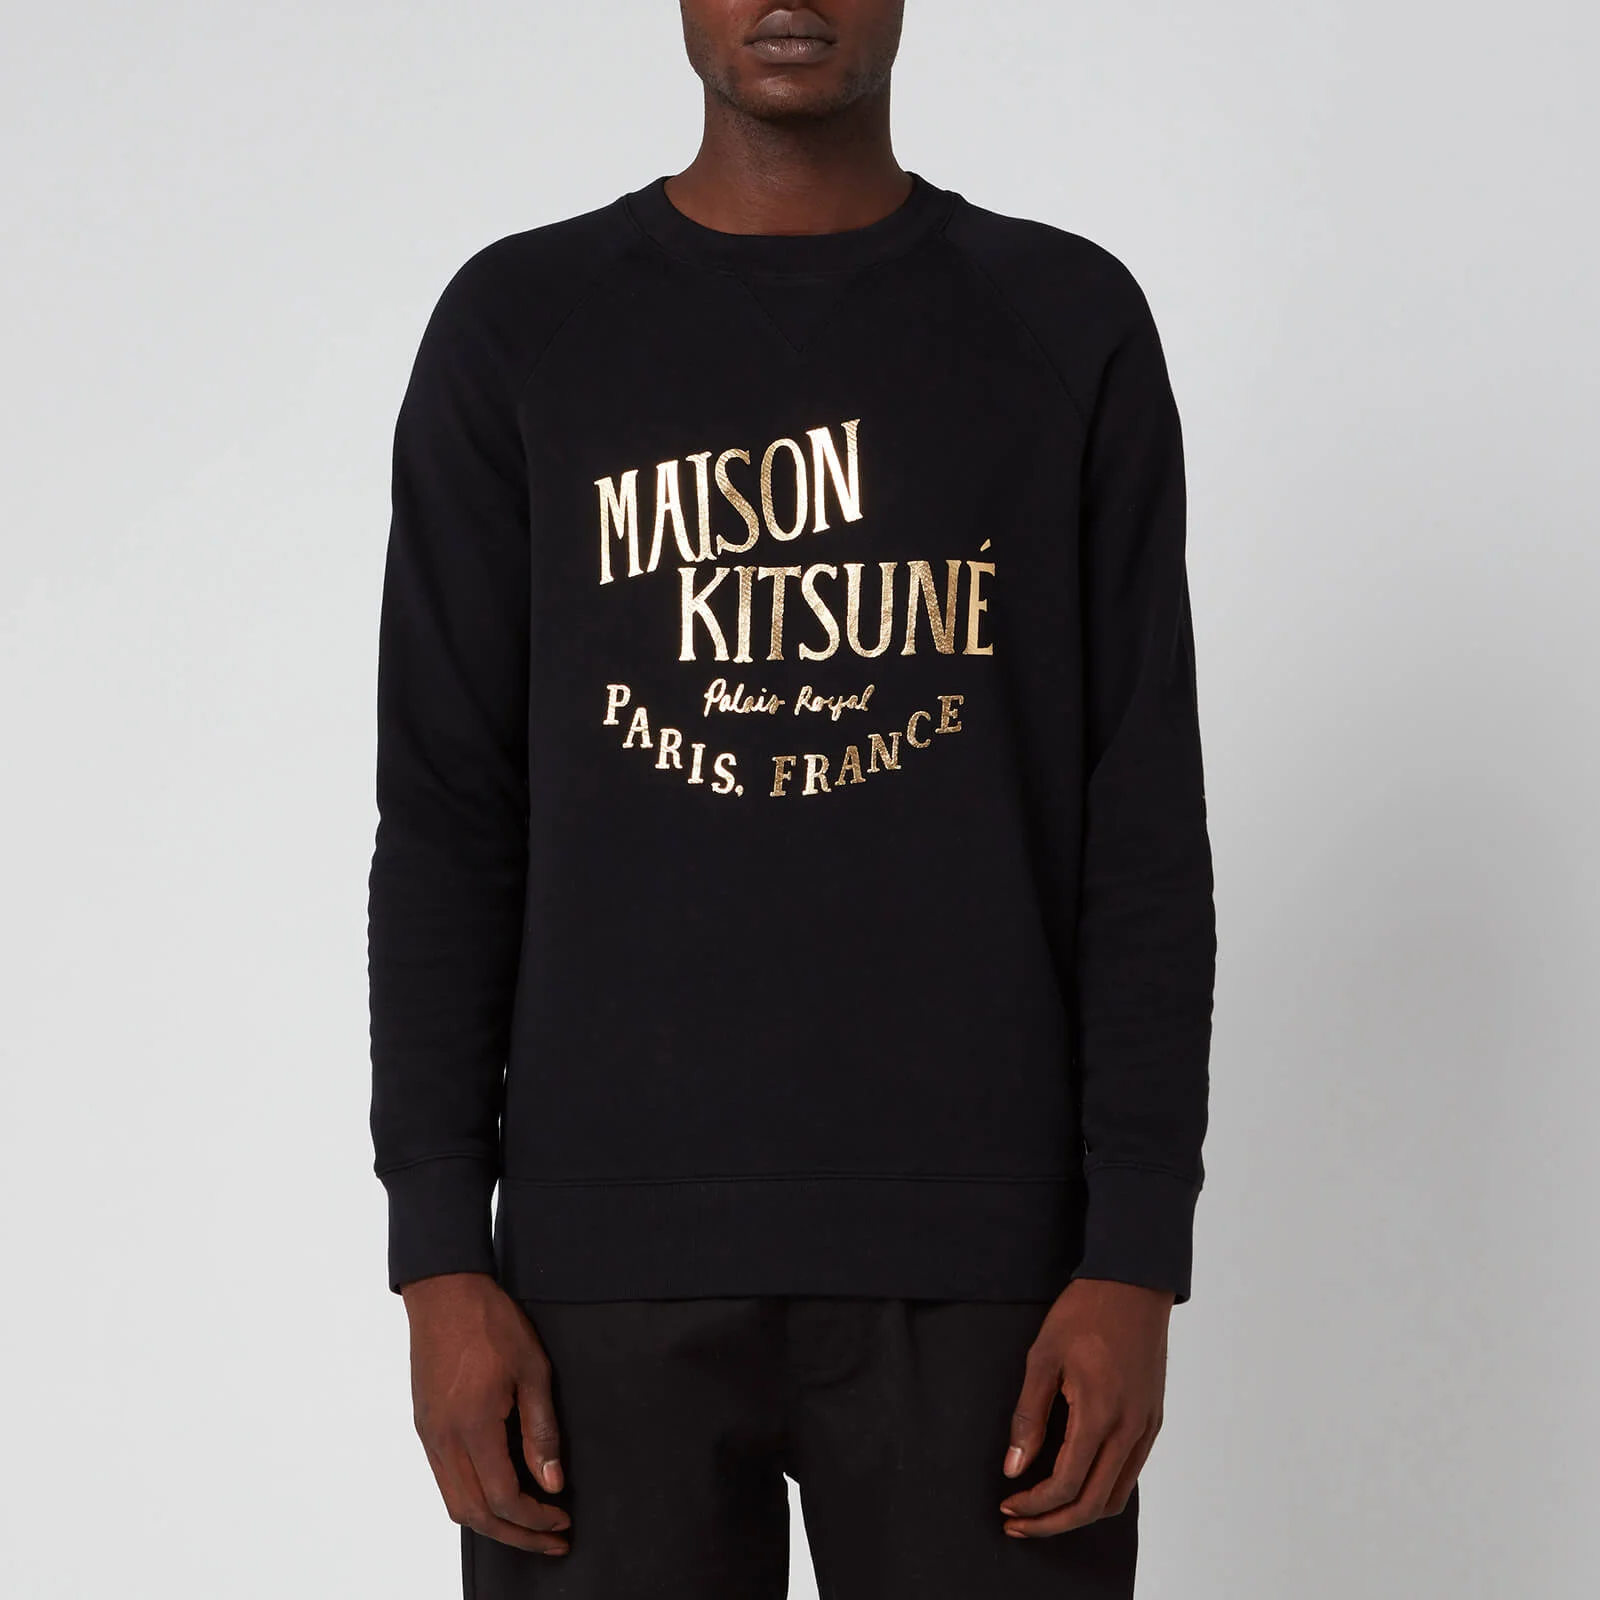 Maison Kitsuné Men's Palais Royal Sweatshirt - Black/Gold Image 1